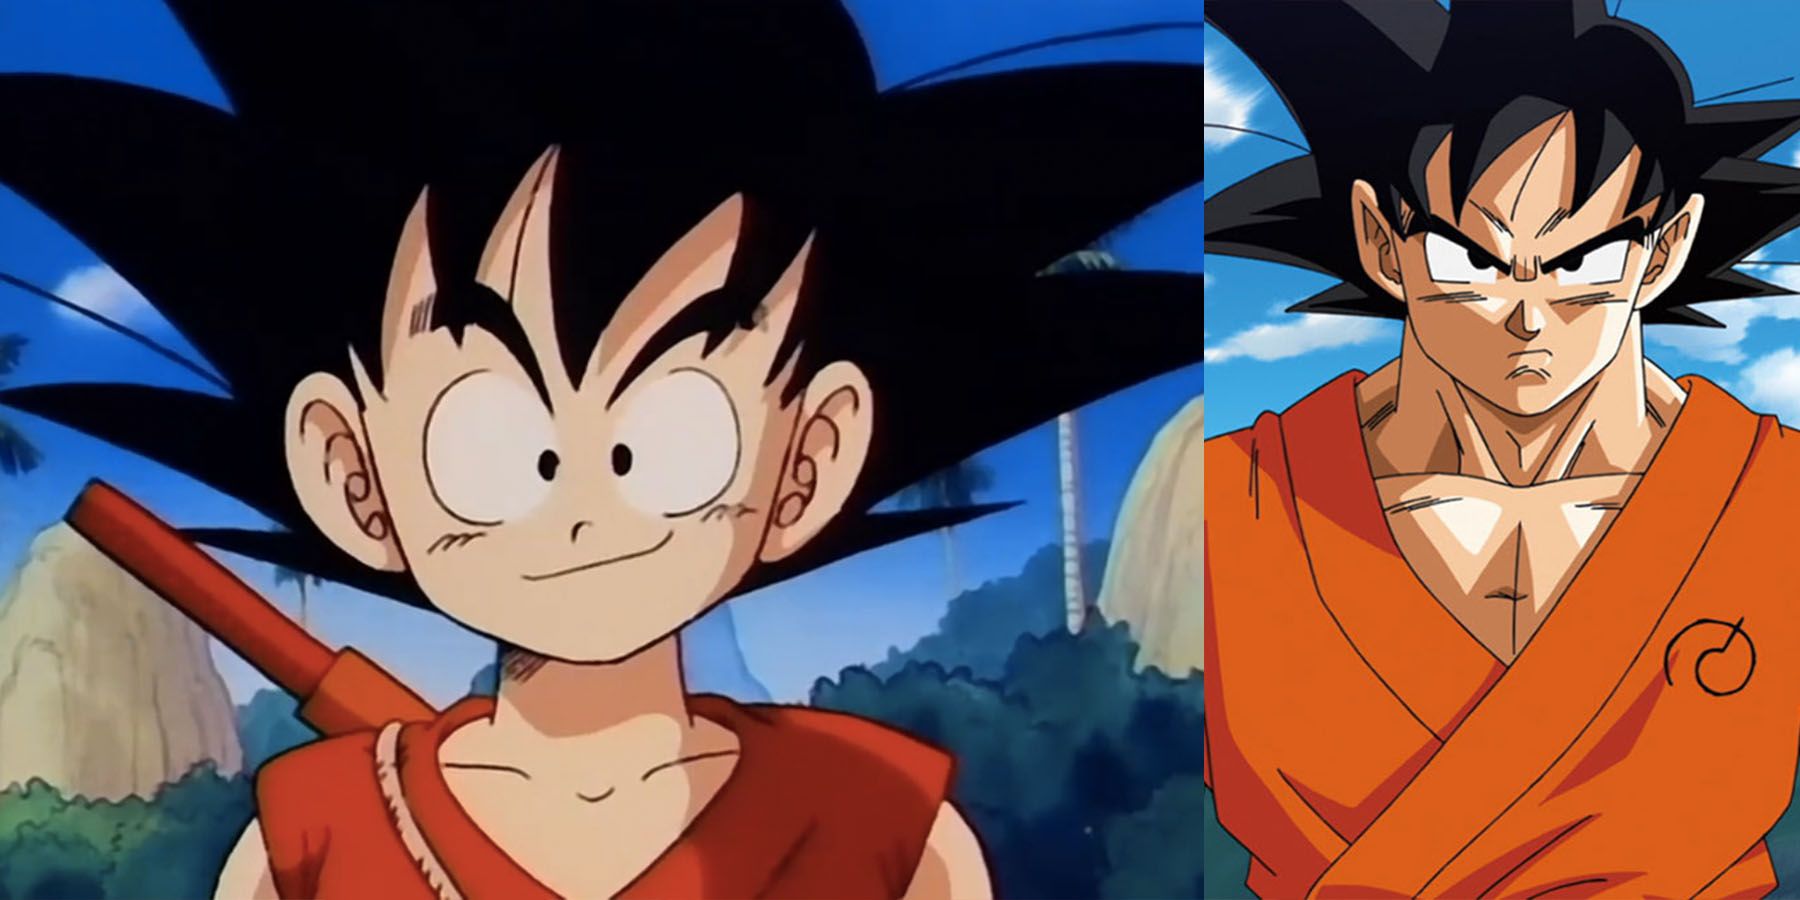 Goku as a boy next to Goku as a man with the same hair